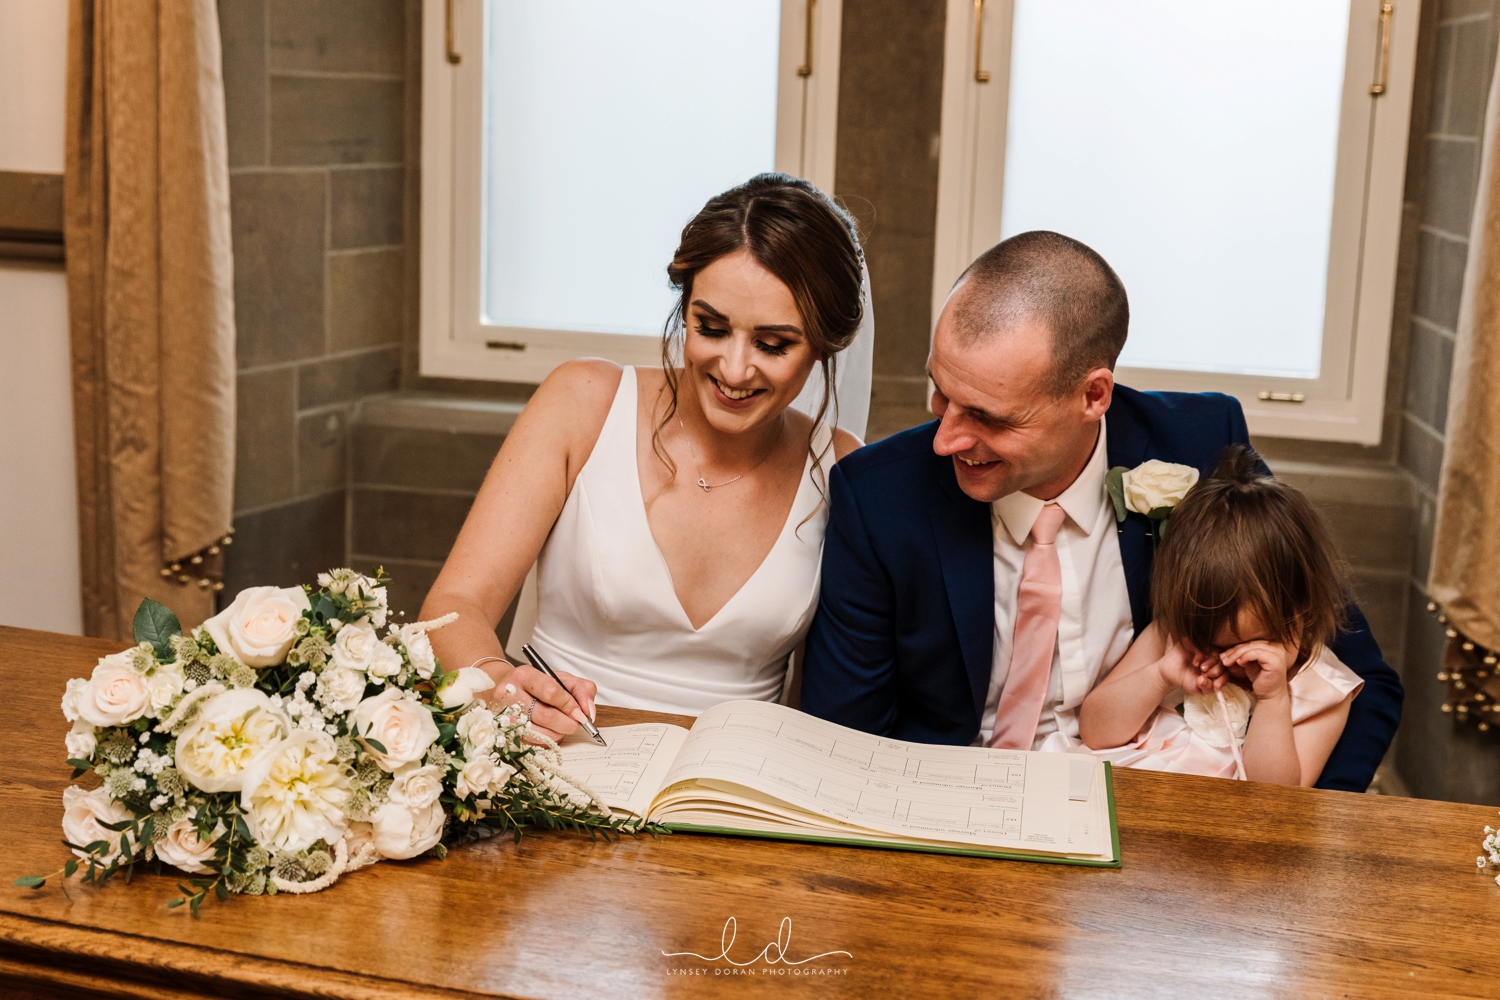 Relaxed Wedding Photographers Yorkshire | West Yorkshire Wedding Photography_0015